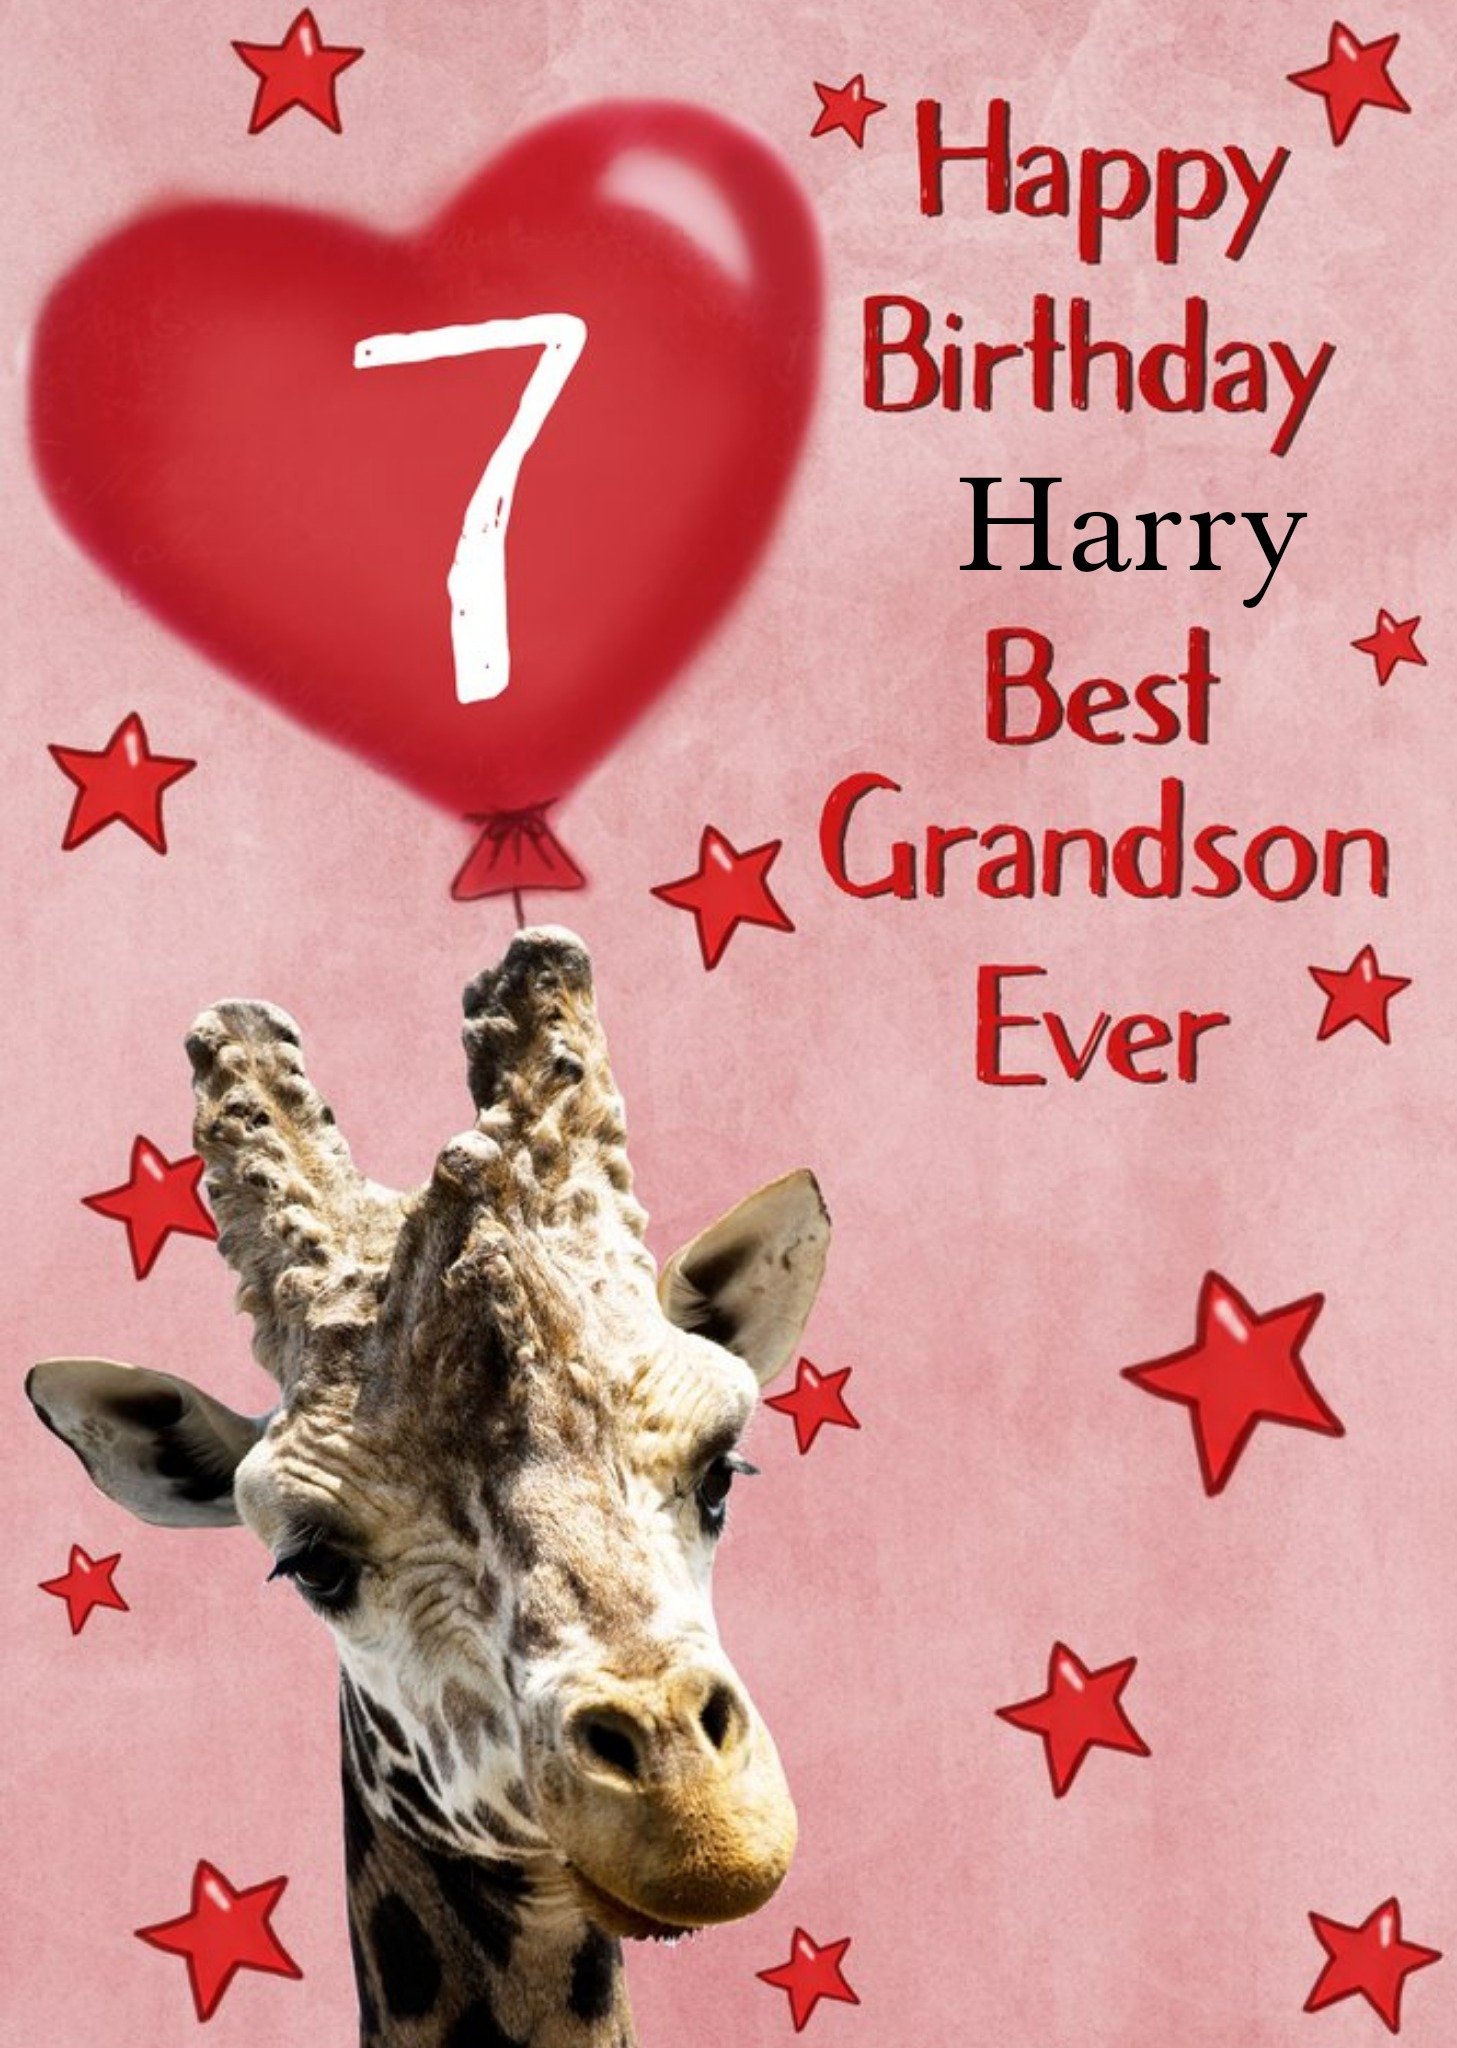 Moonpig Photo Of Giraffe With Birthday Balloon Grandson 7th Birthday Card, Large